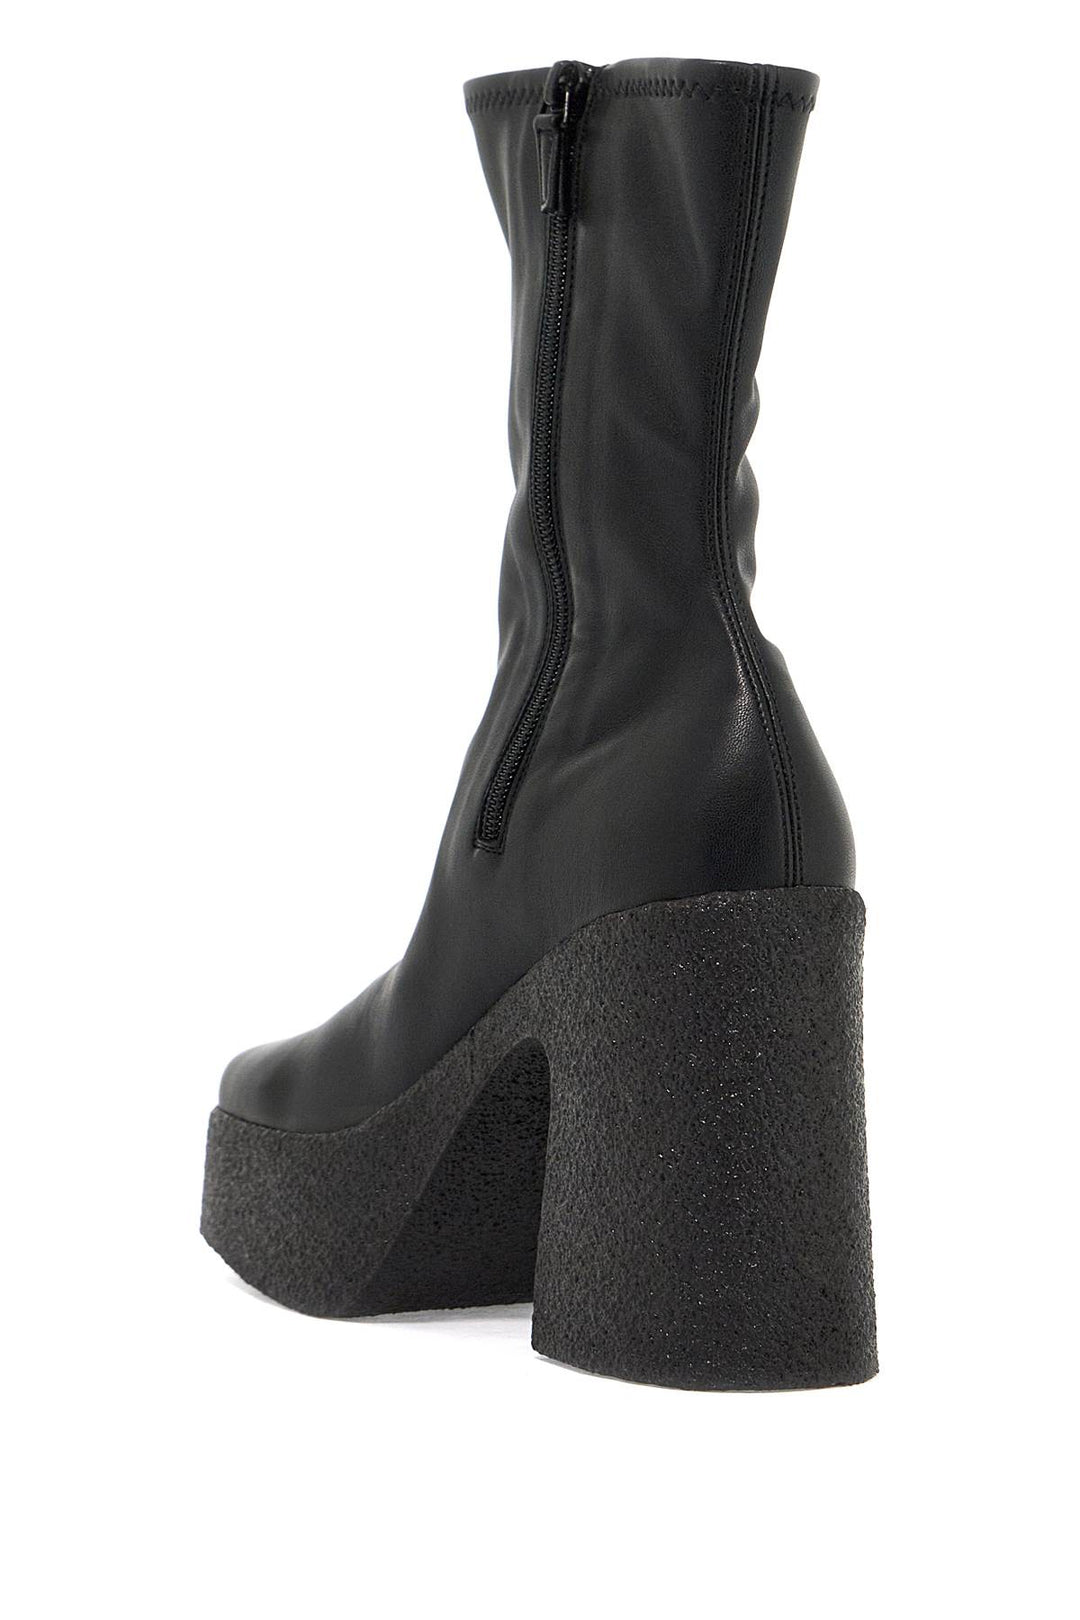 Stella Mc Cartney Skyla Ankle Boots   Black